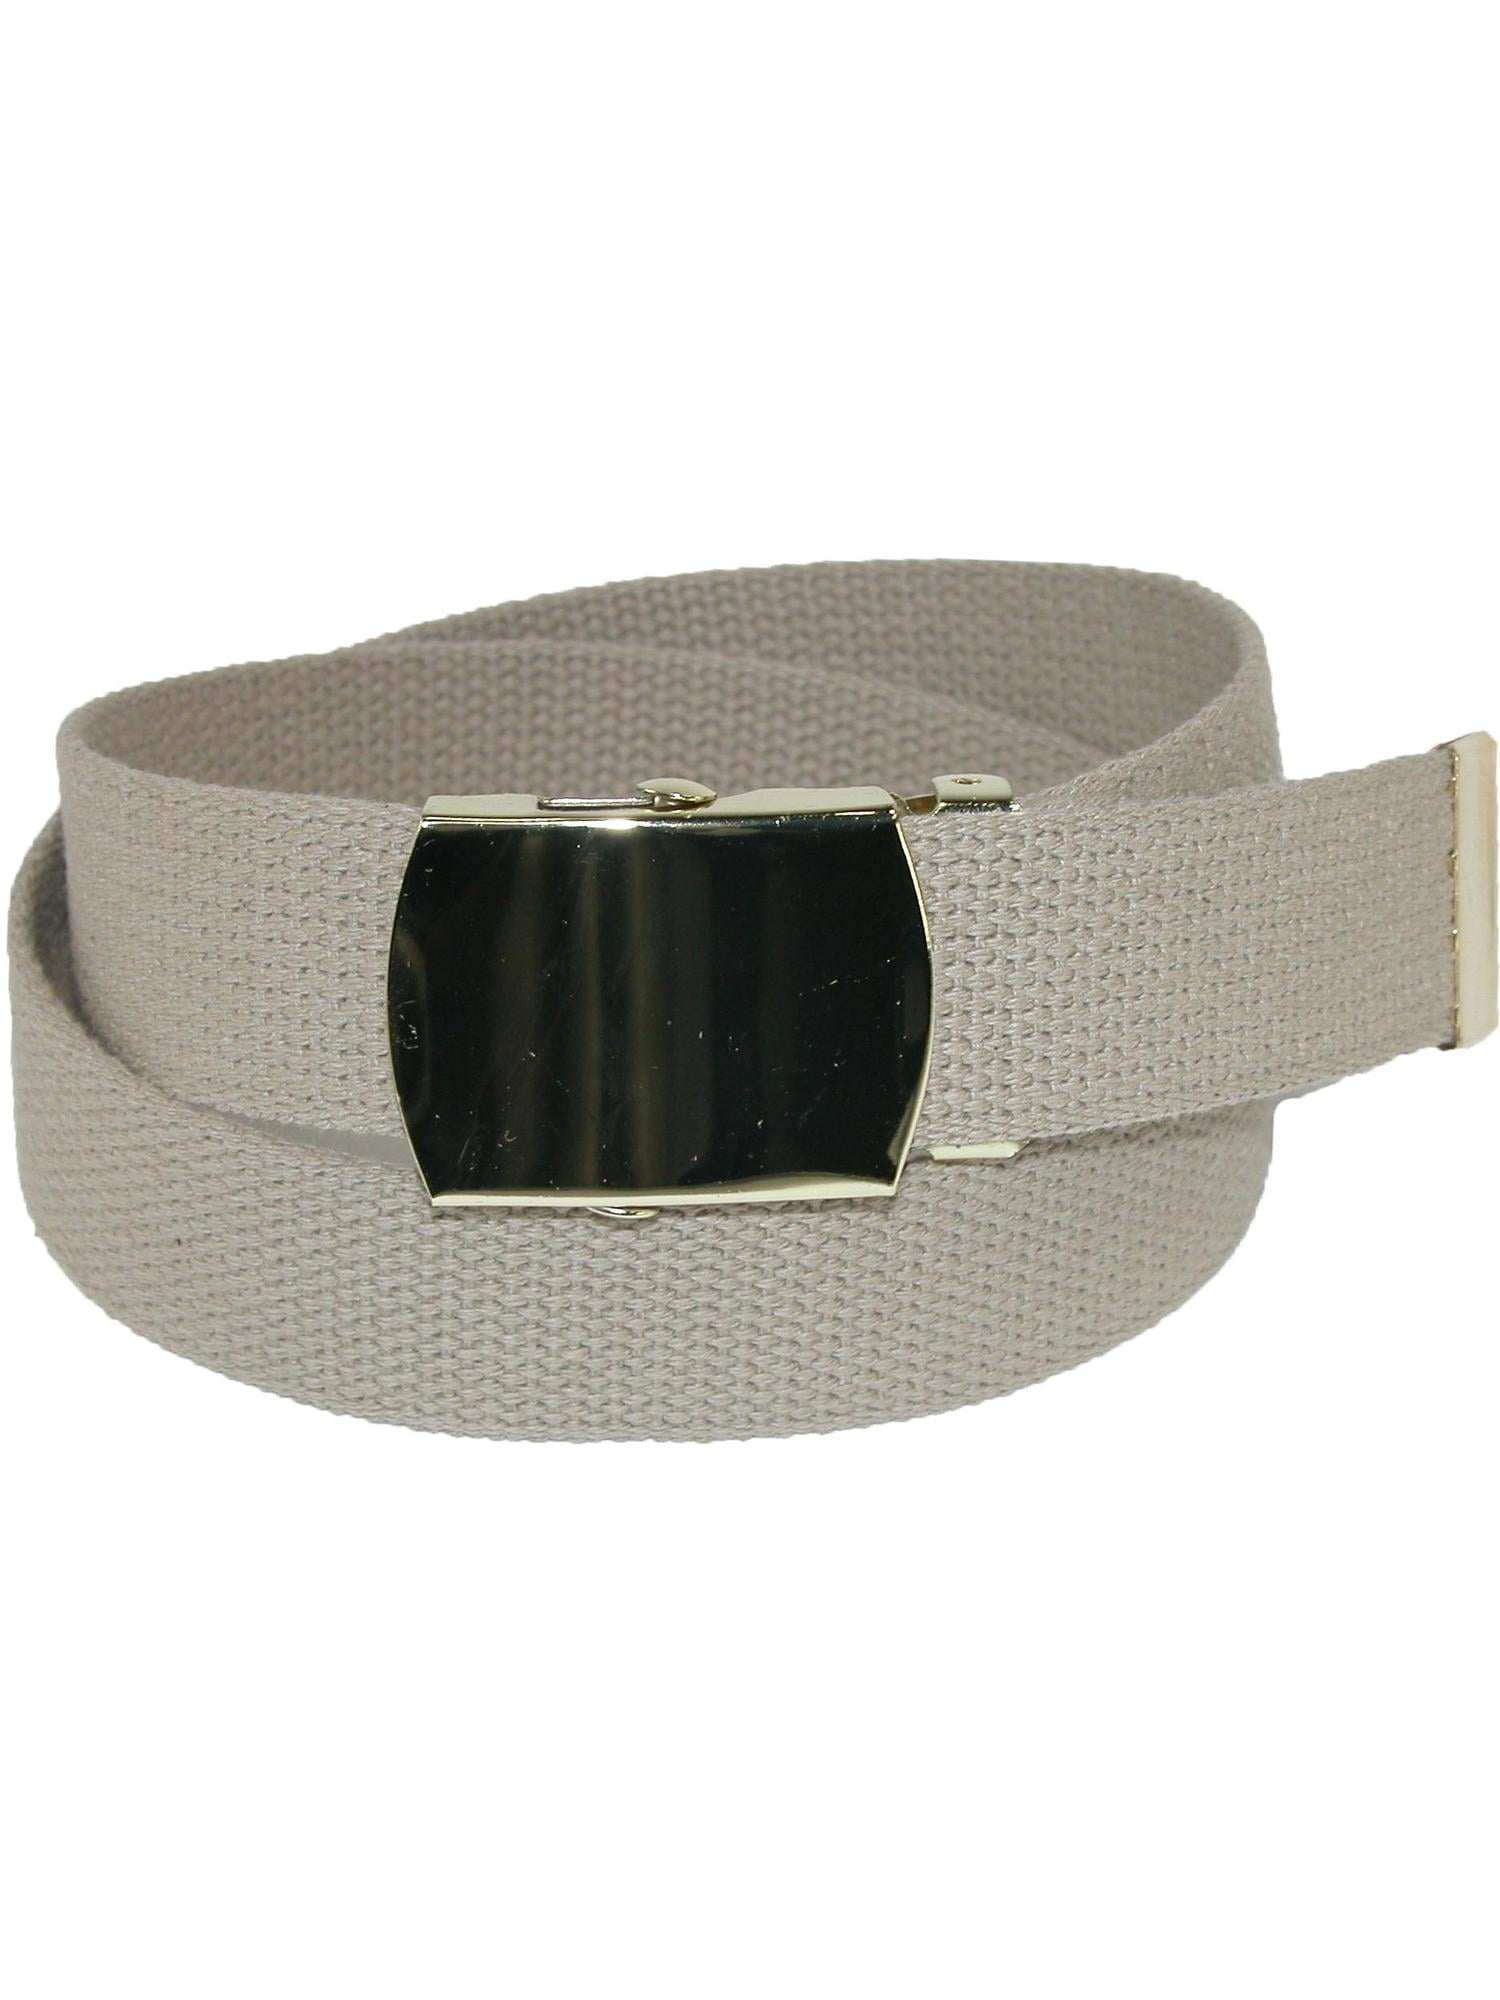 Sunny Belt Kids Unisex 1 ¼ Inch Wide Military Web Belt Fits Up To A 28 Waist 